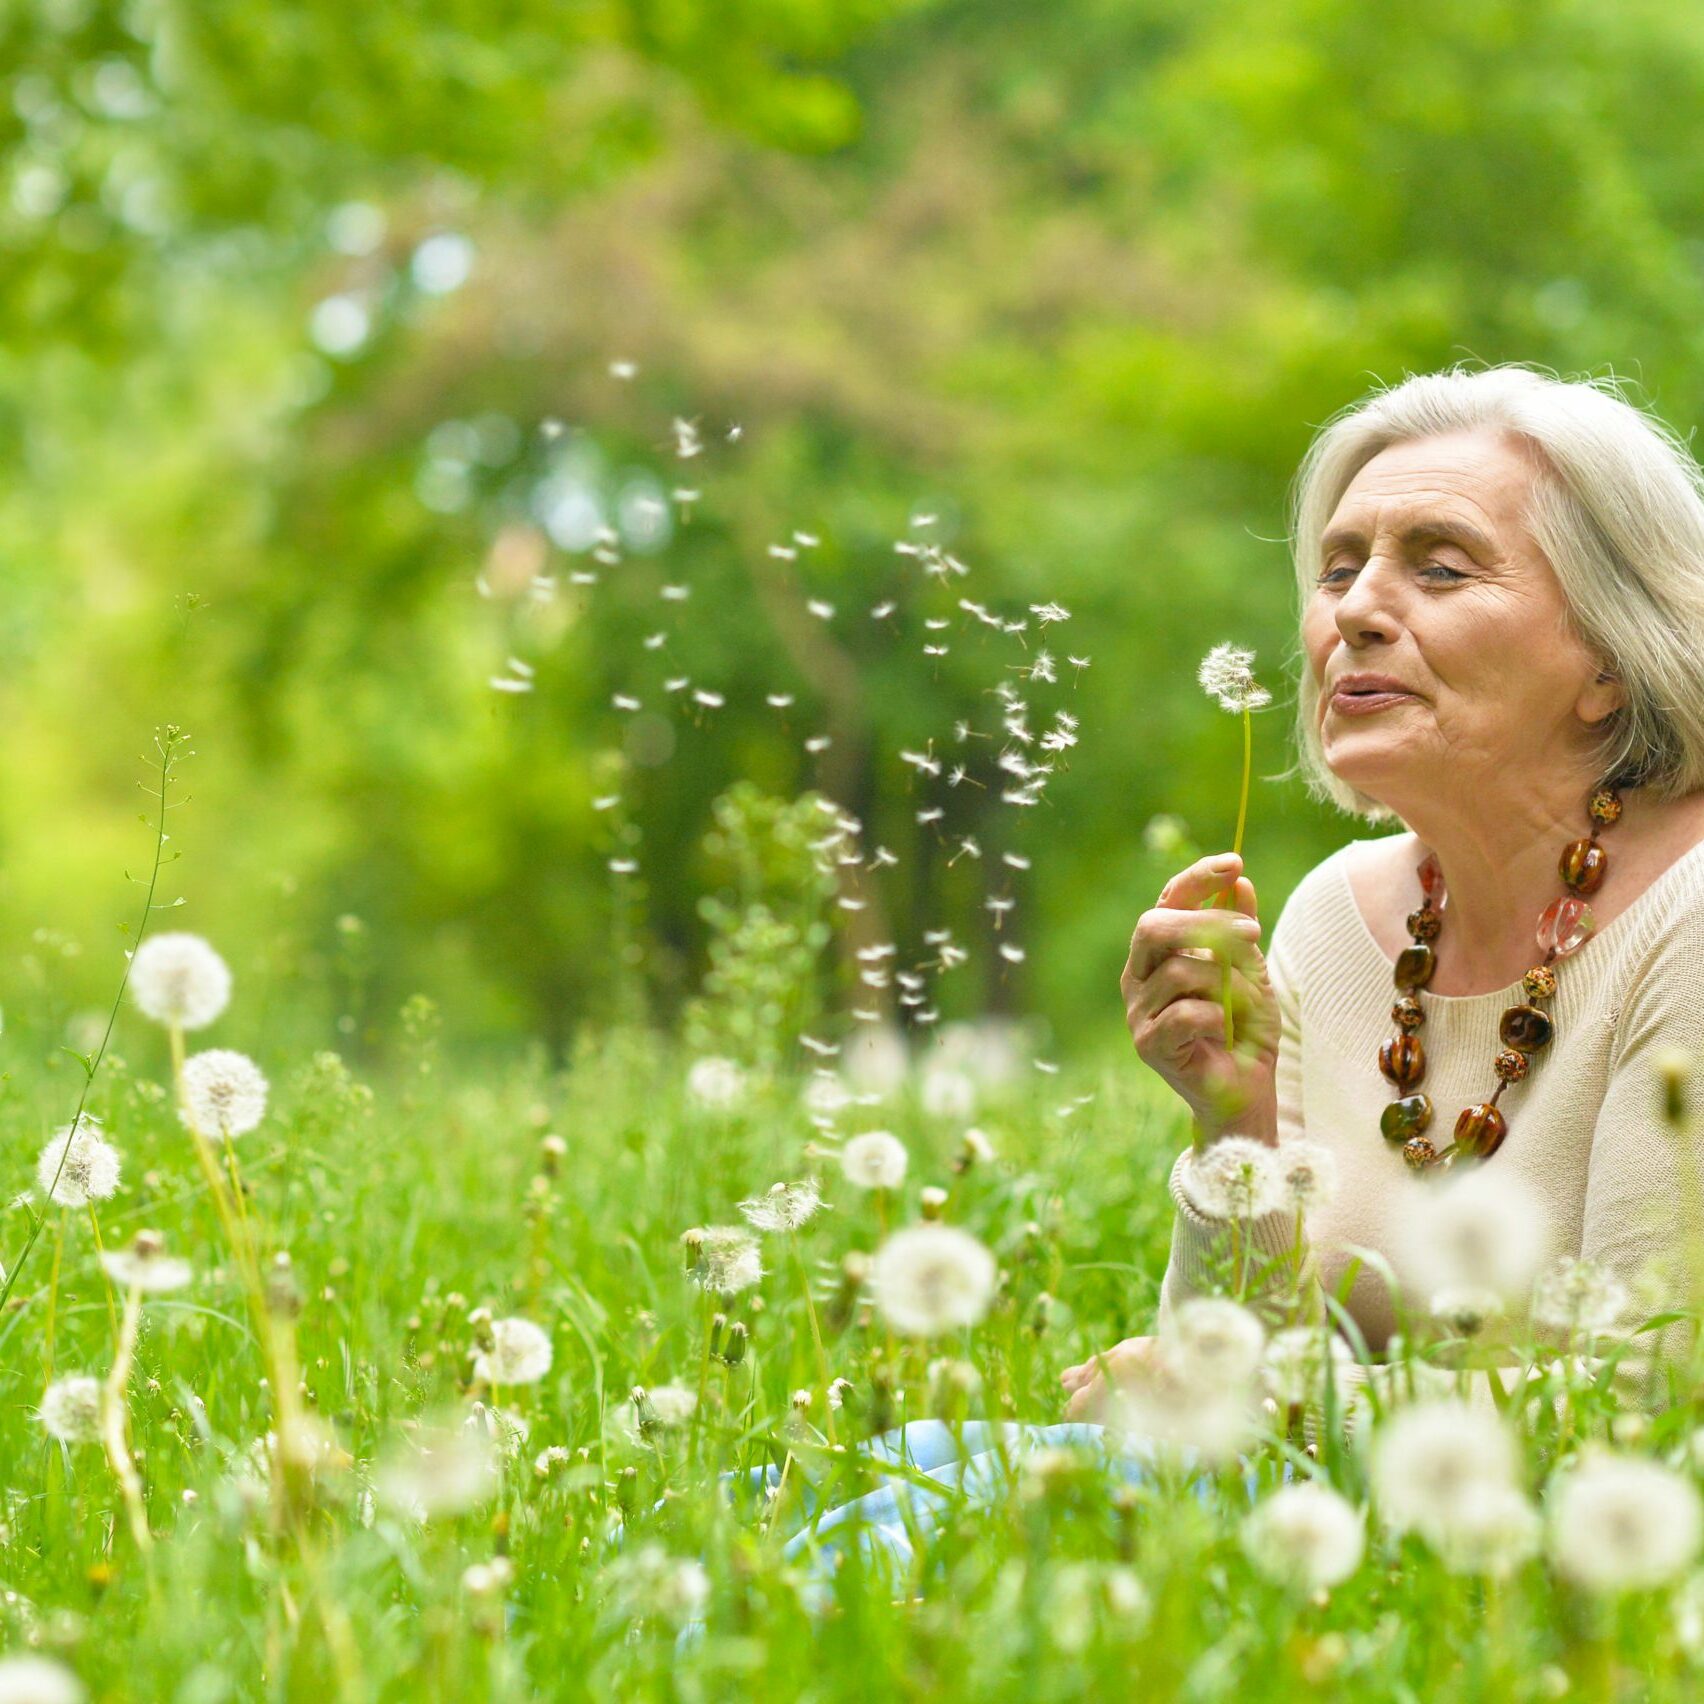 Portrait of a beautiful senior woman in green field with dandelions